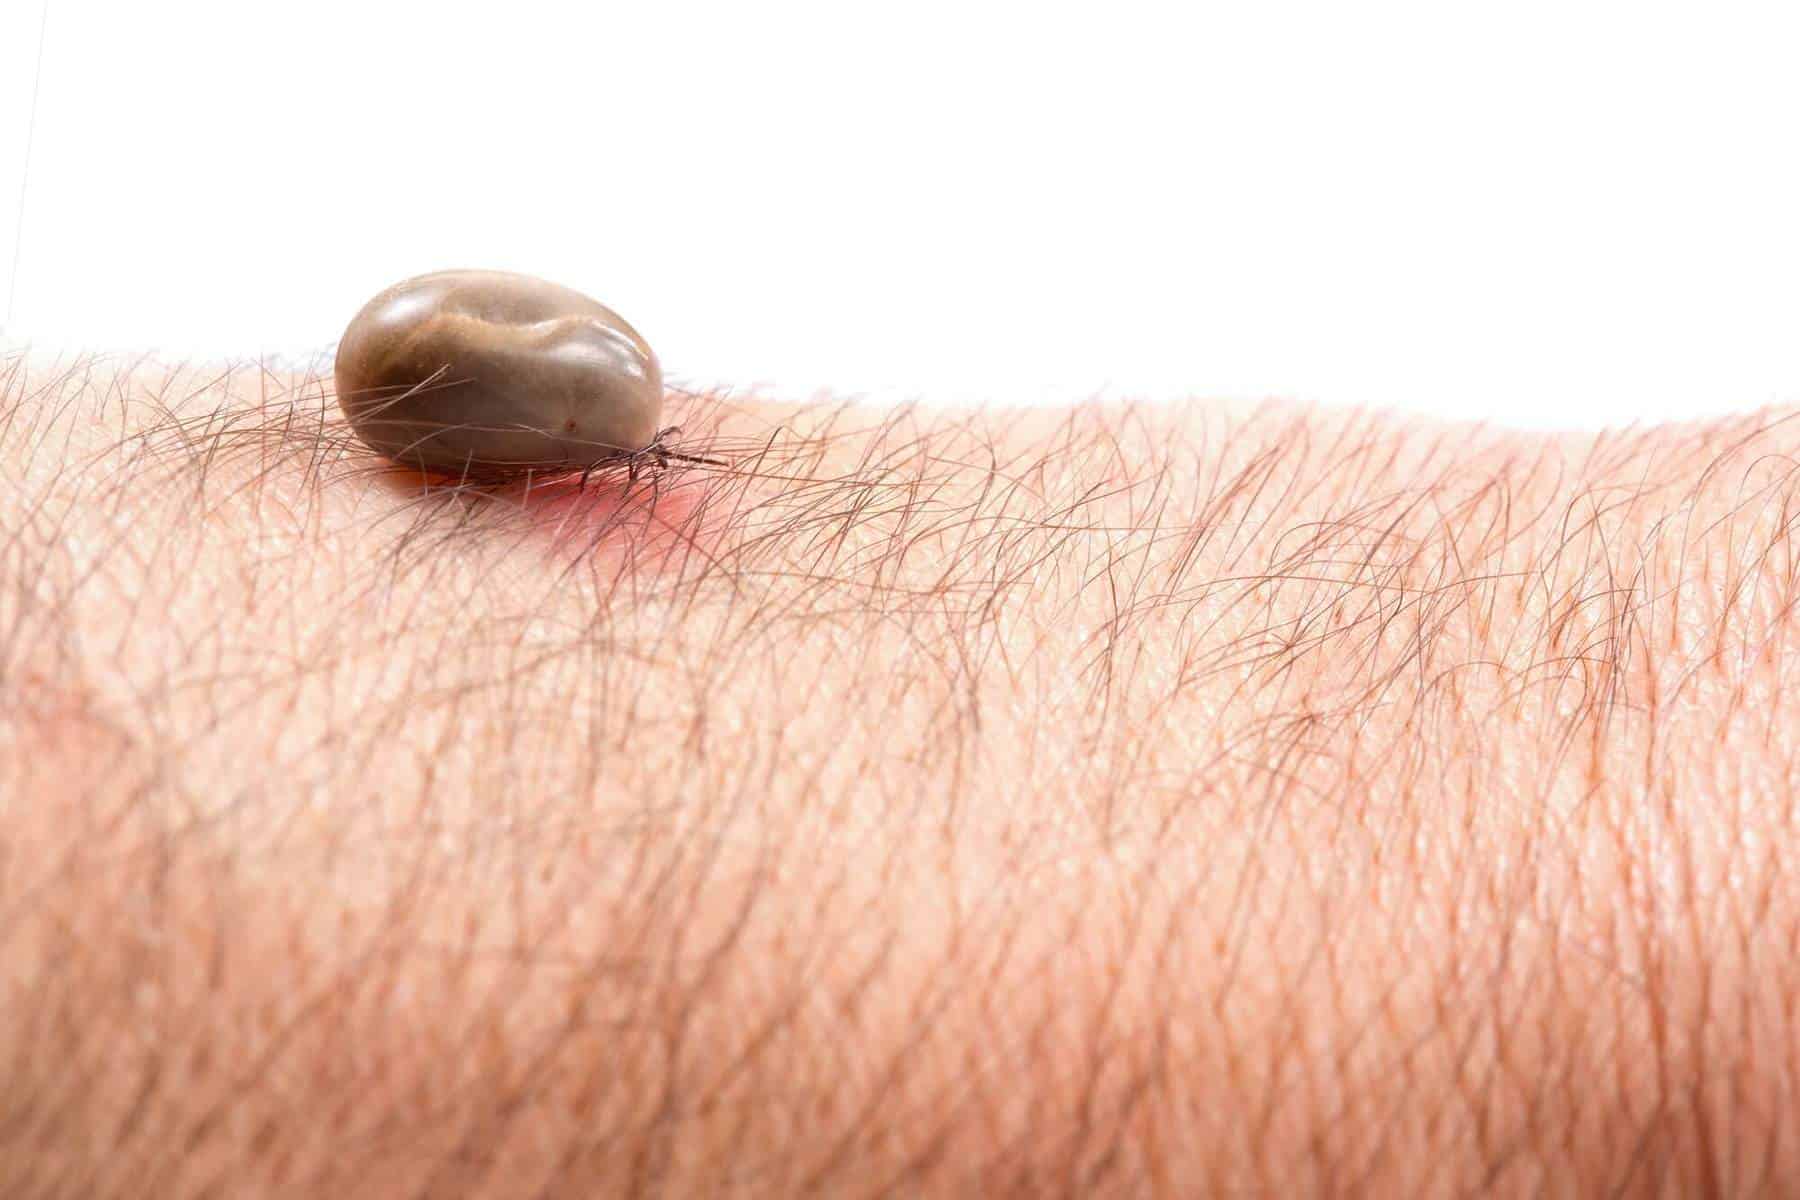 Tick bite - Lyme Disease